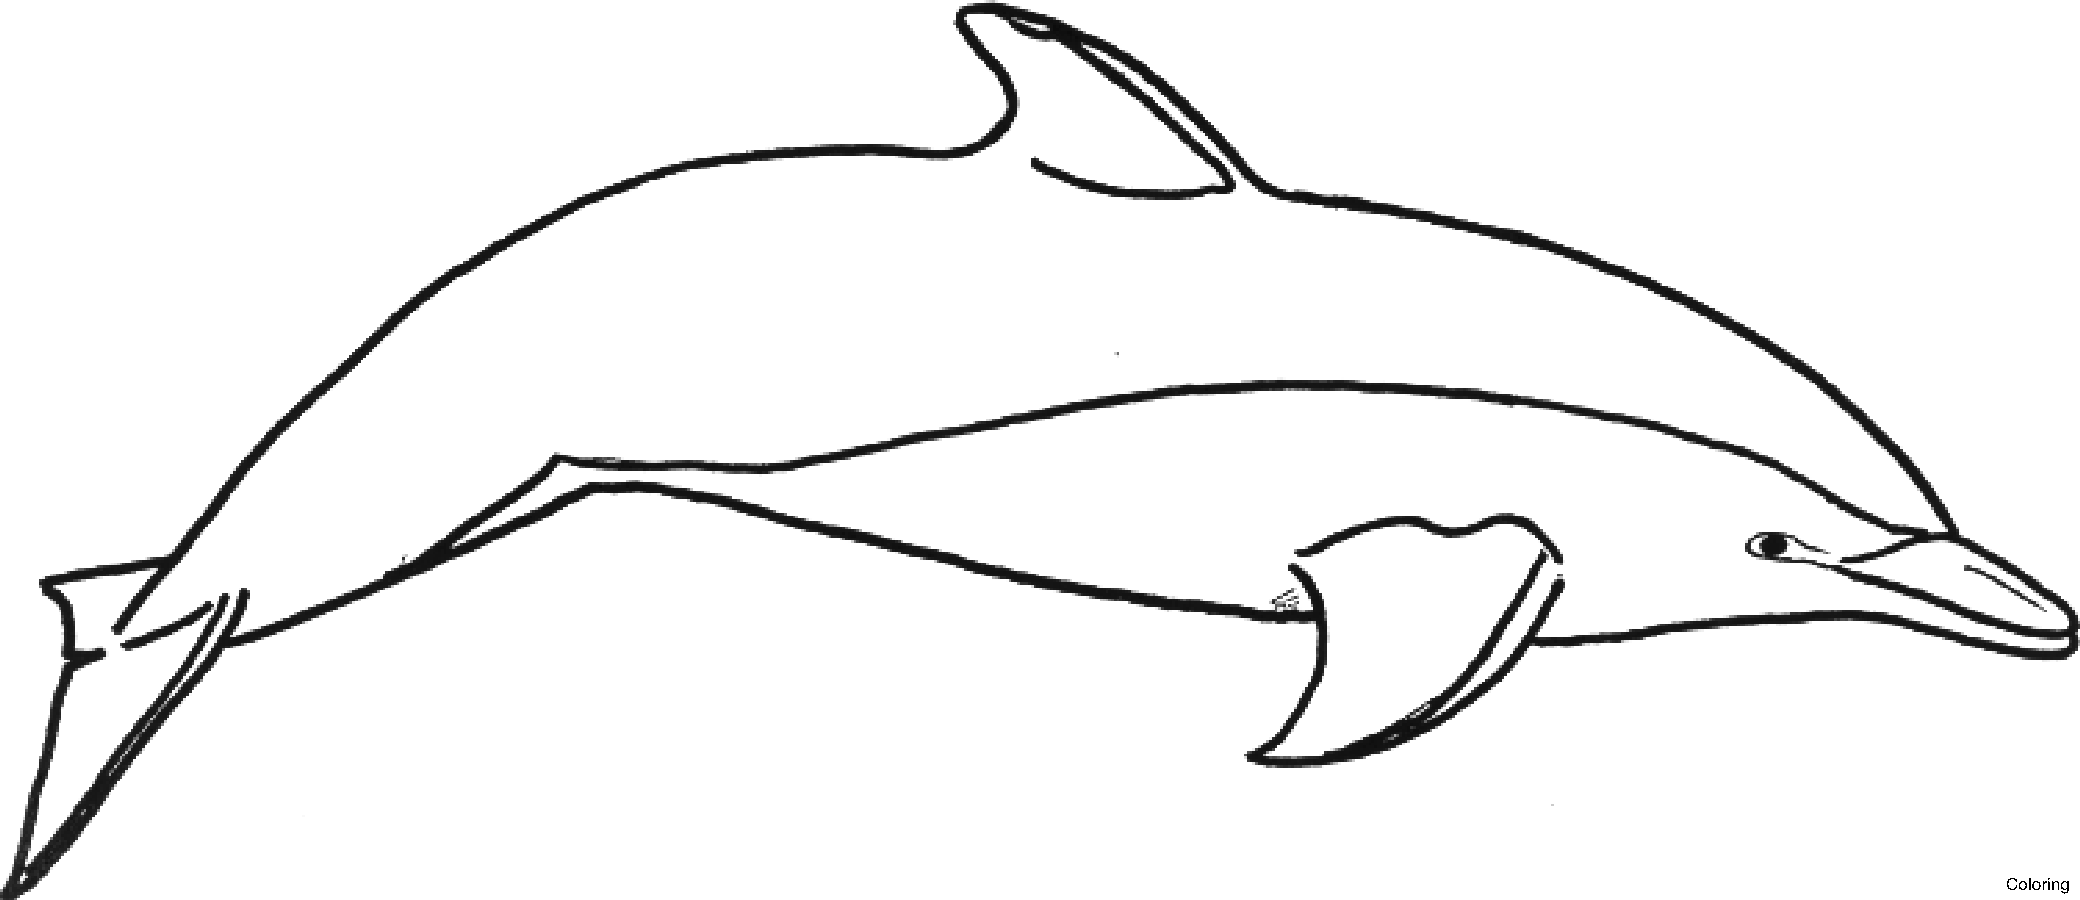 dolphin clipart logo